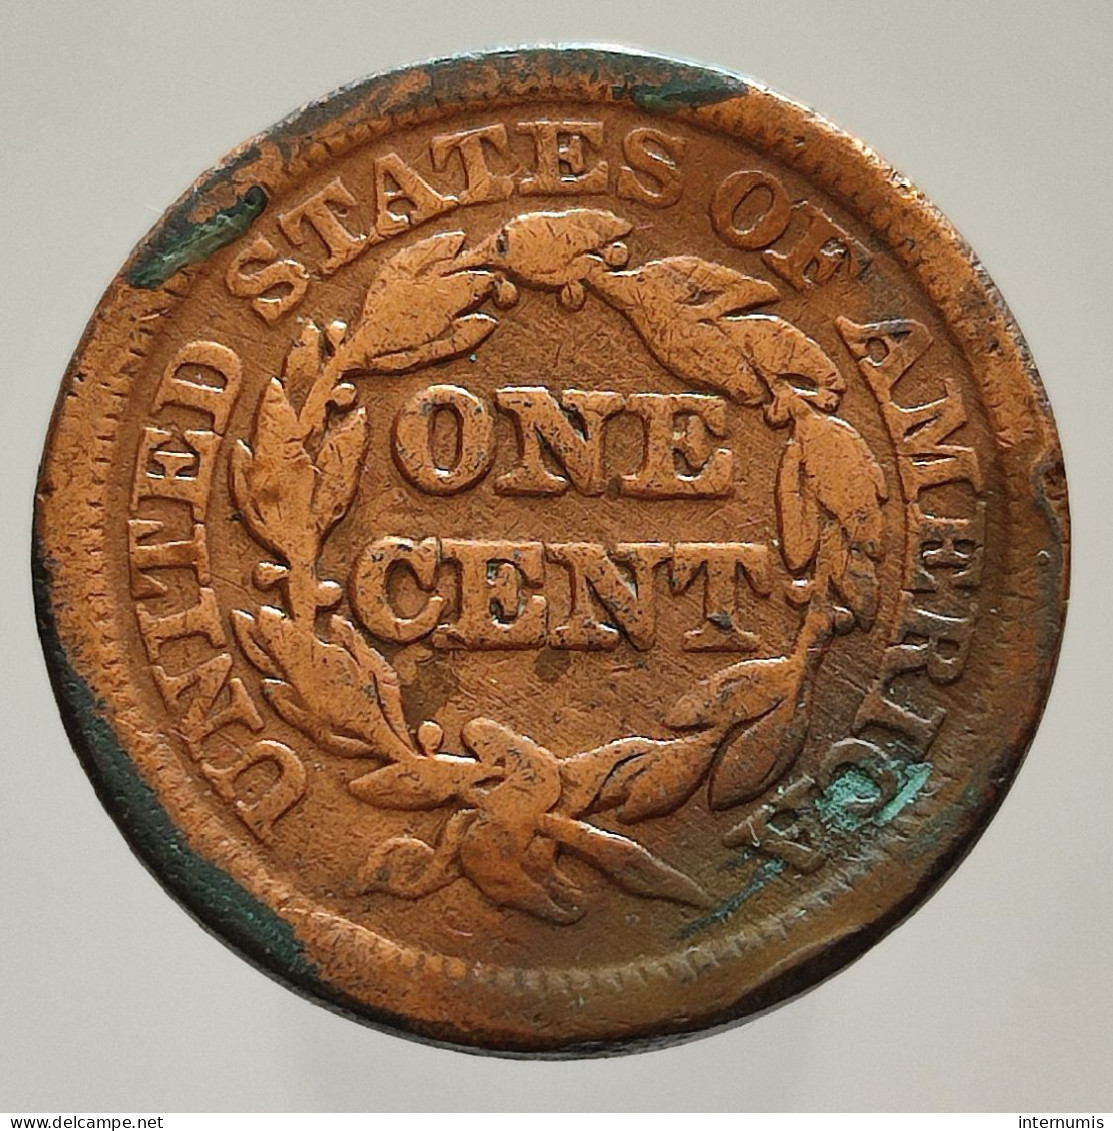 Etats-Unis / USA, Liberty Head, 1 Cent, 1848, Cuivre (Copper), B (F), KM#67 - 1840-1857: Braided Hair